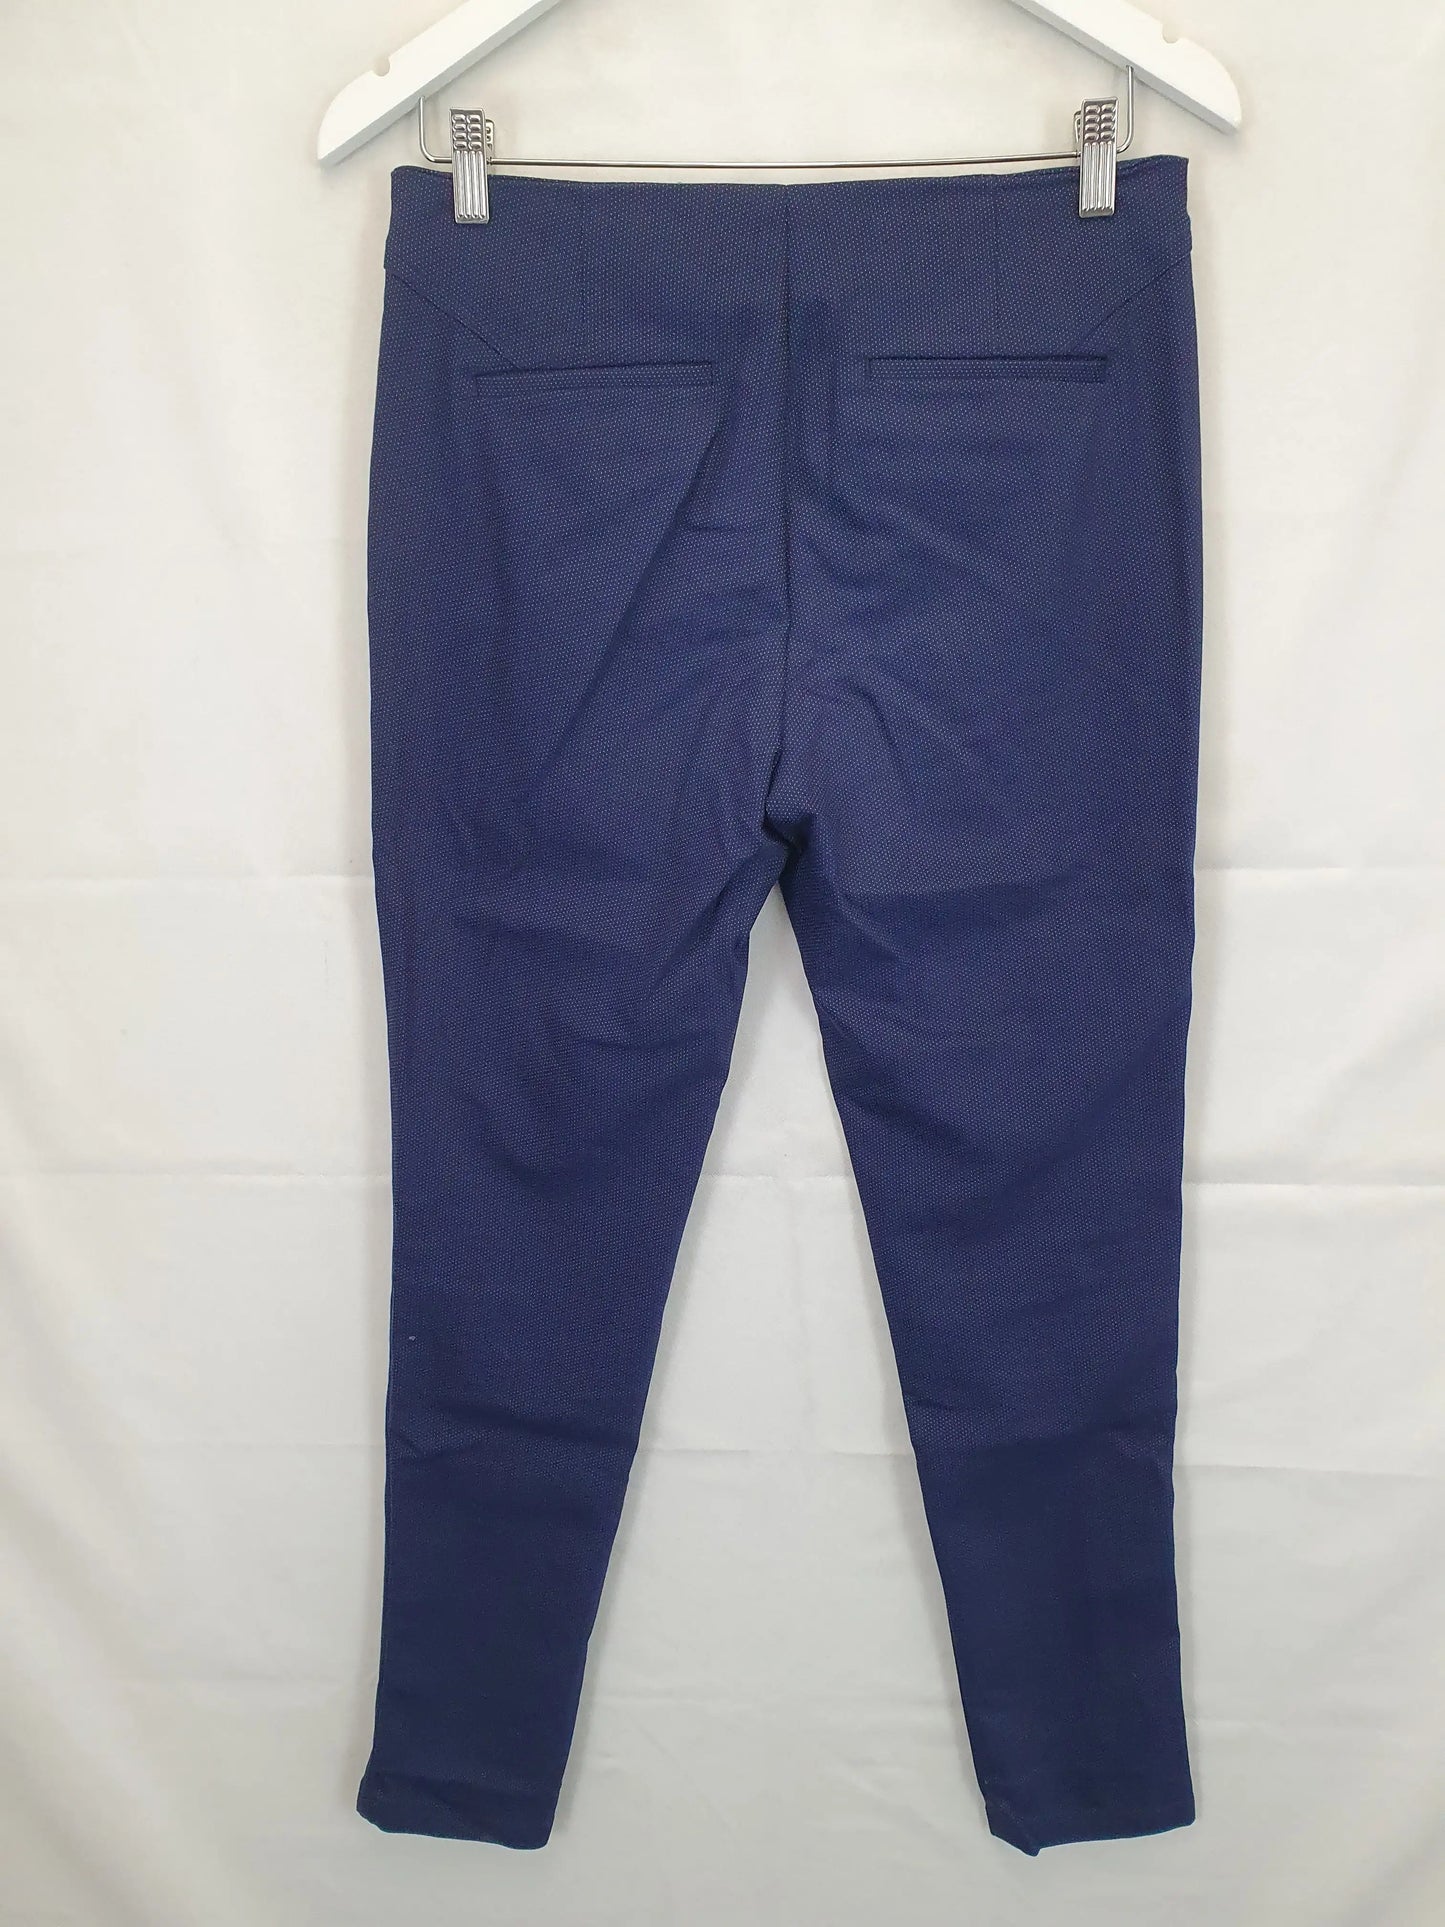 Marcs Navy Dot Work Pants Size 10 – SwapUp